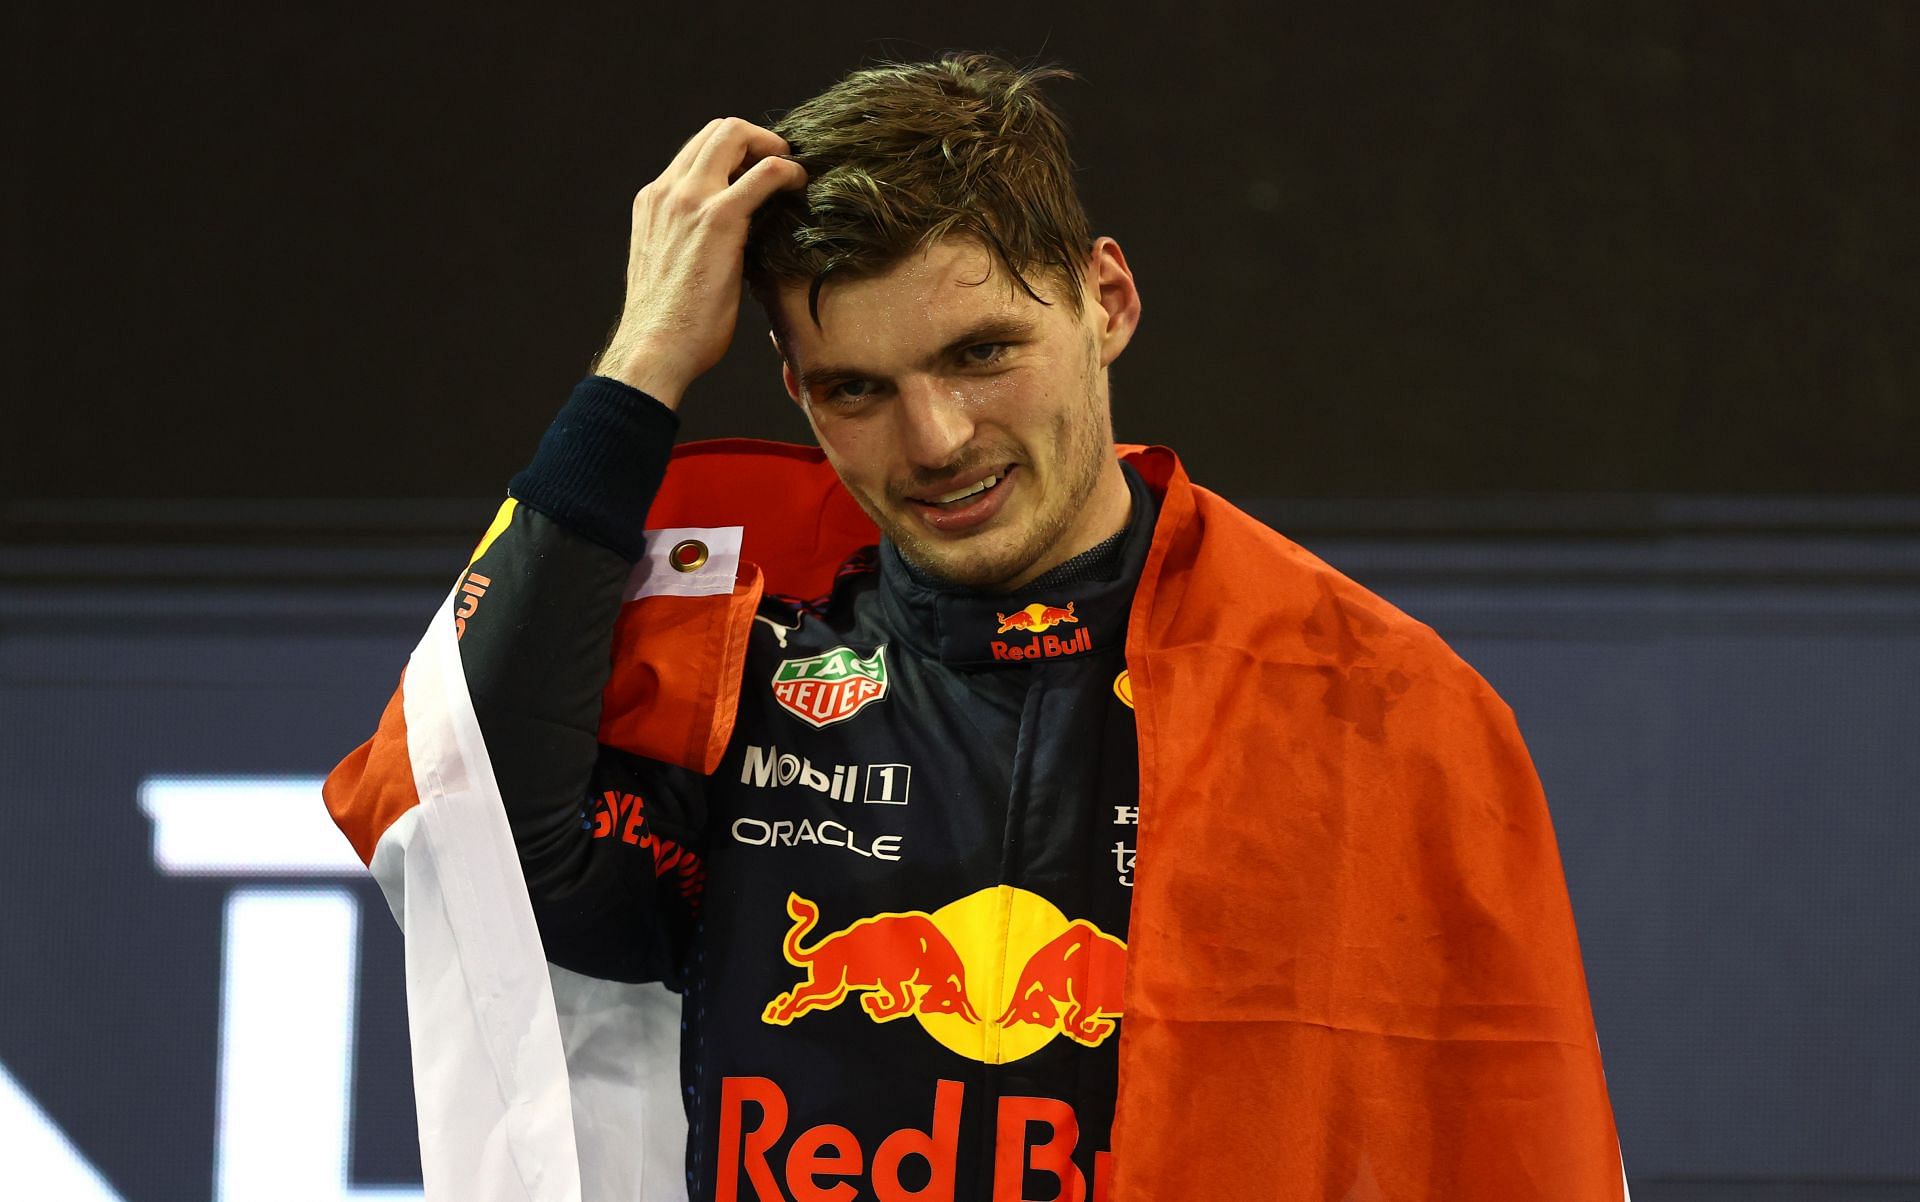 Max Verstappen won his maiden F1 world championship at the 2021 Abu Dhabi Grand Prix